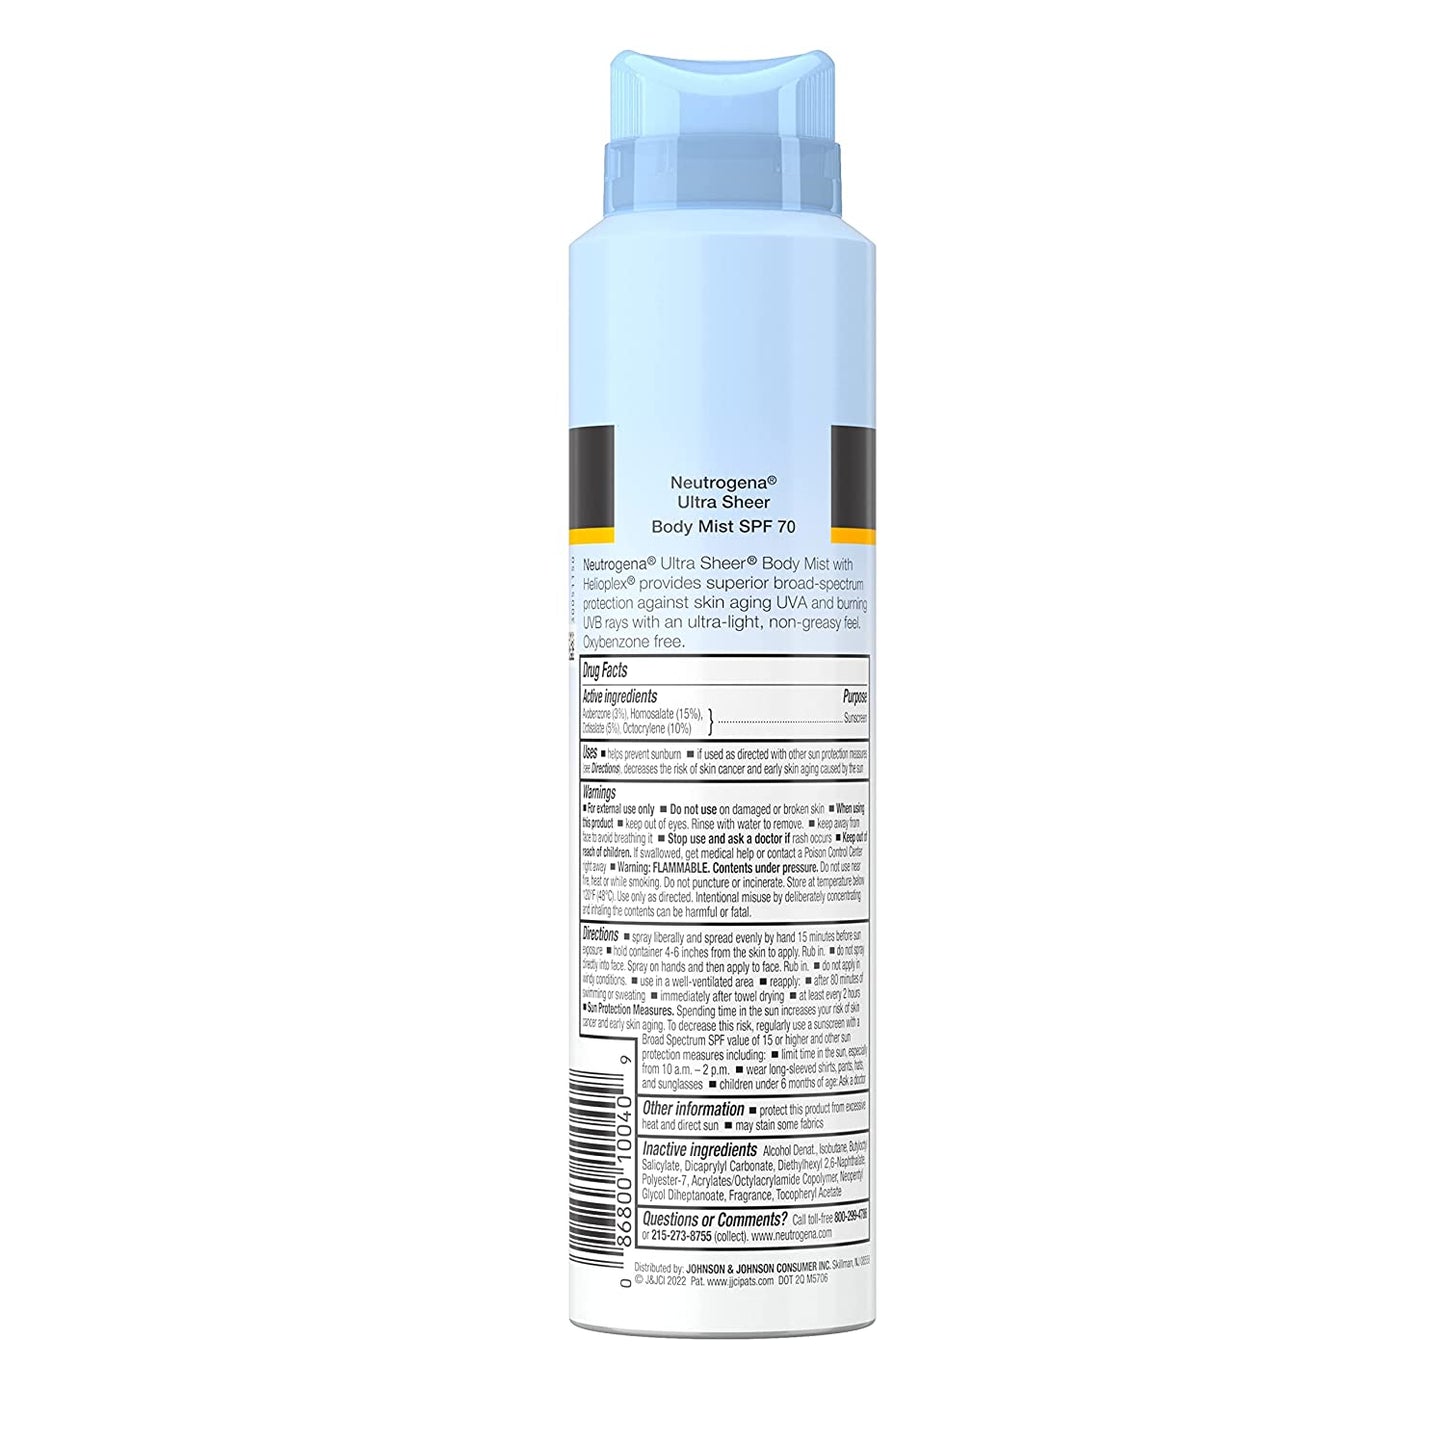 Neutrogena Ultra Sheer Body Mist Sunscreen Broad Spectrum SPF 70, 5 oz / 141g